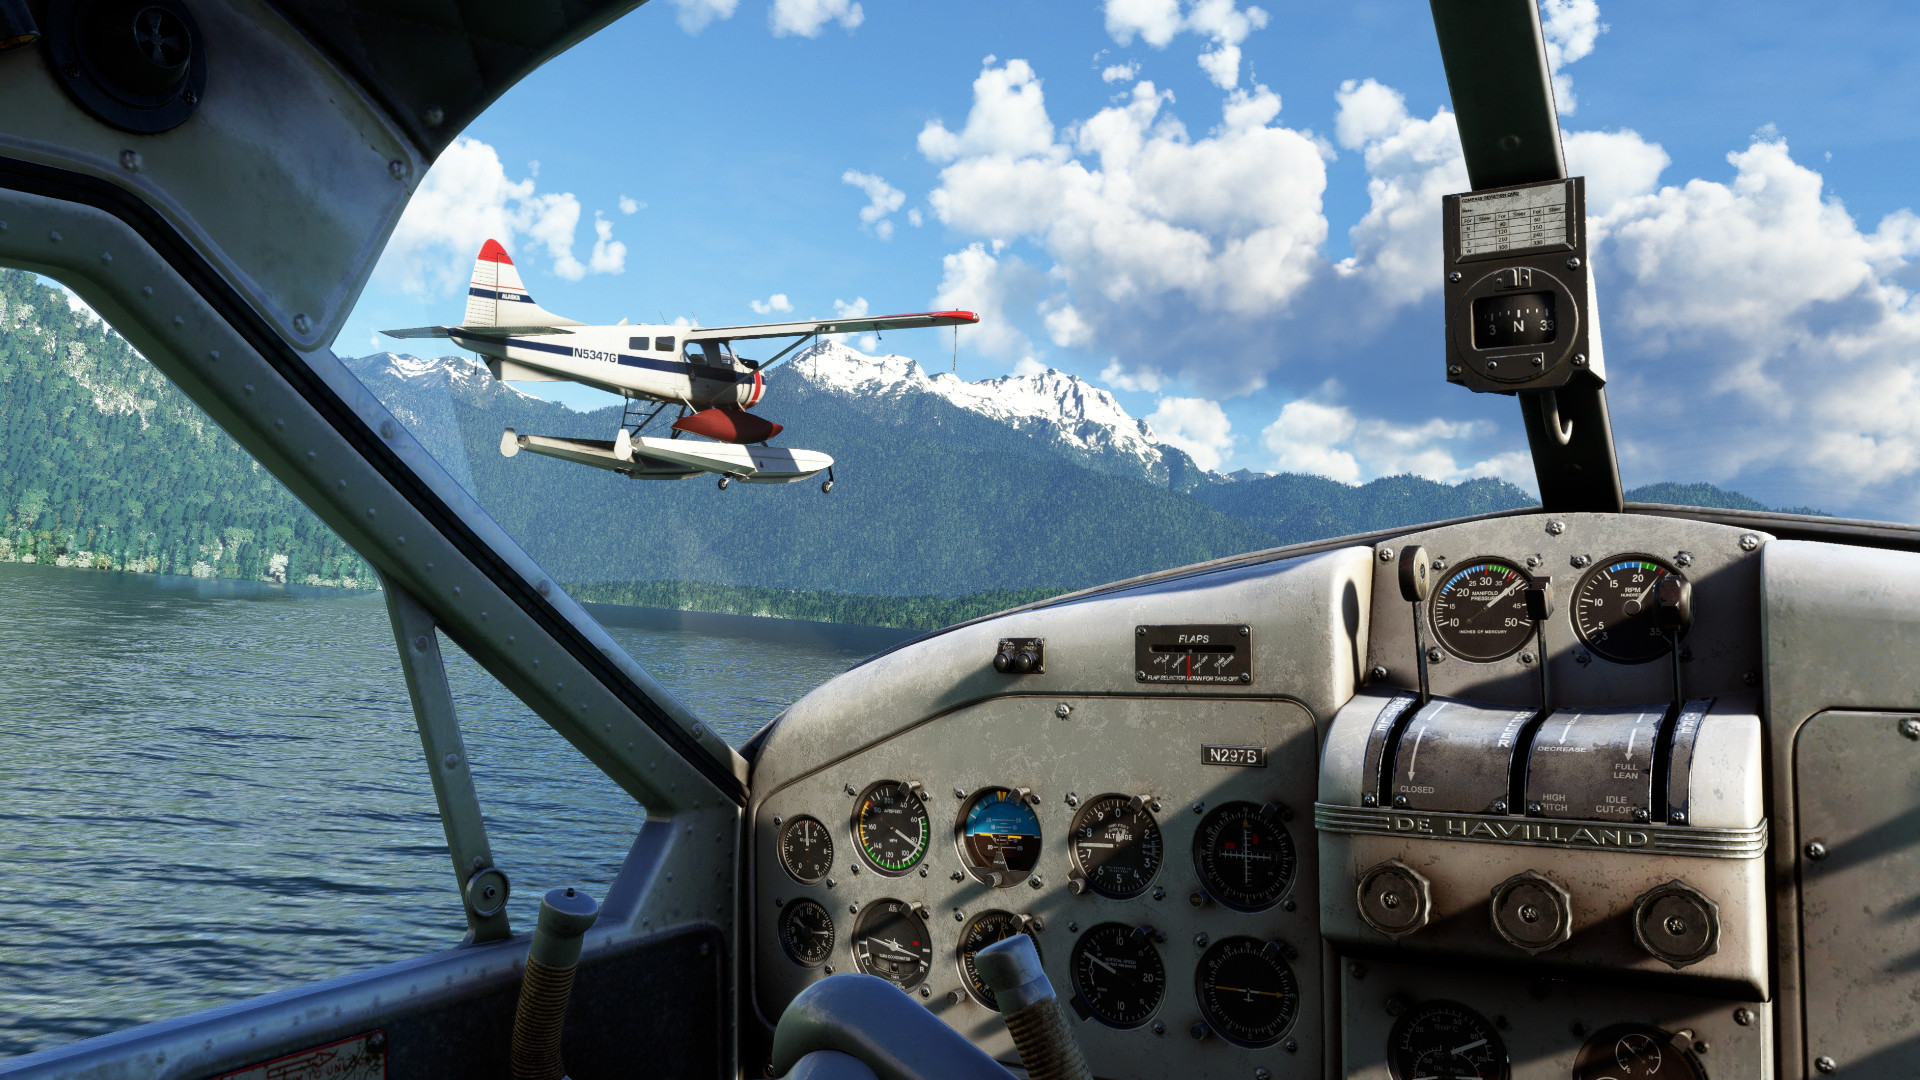 In the Microsoft Flight Simulator cockpit view